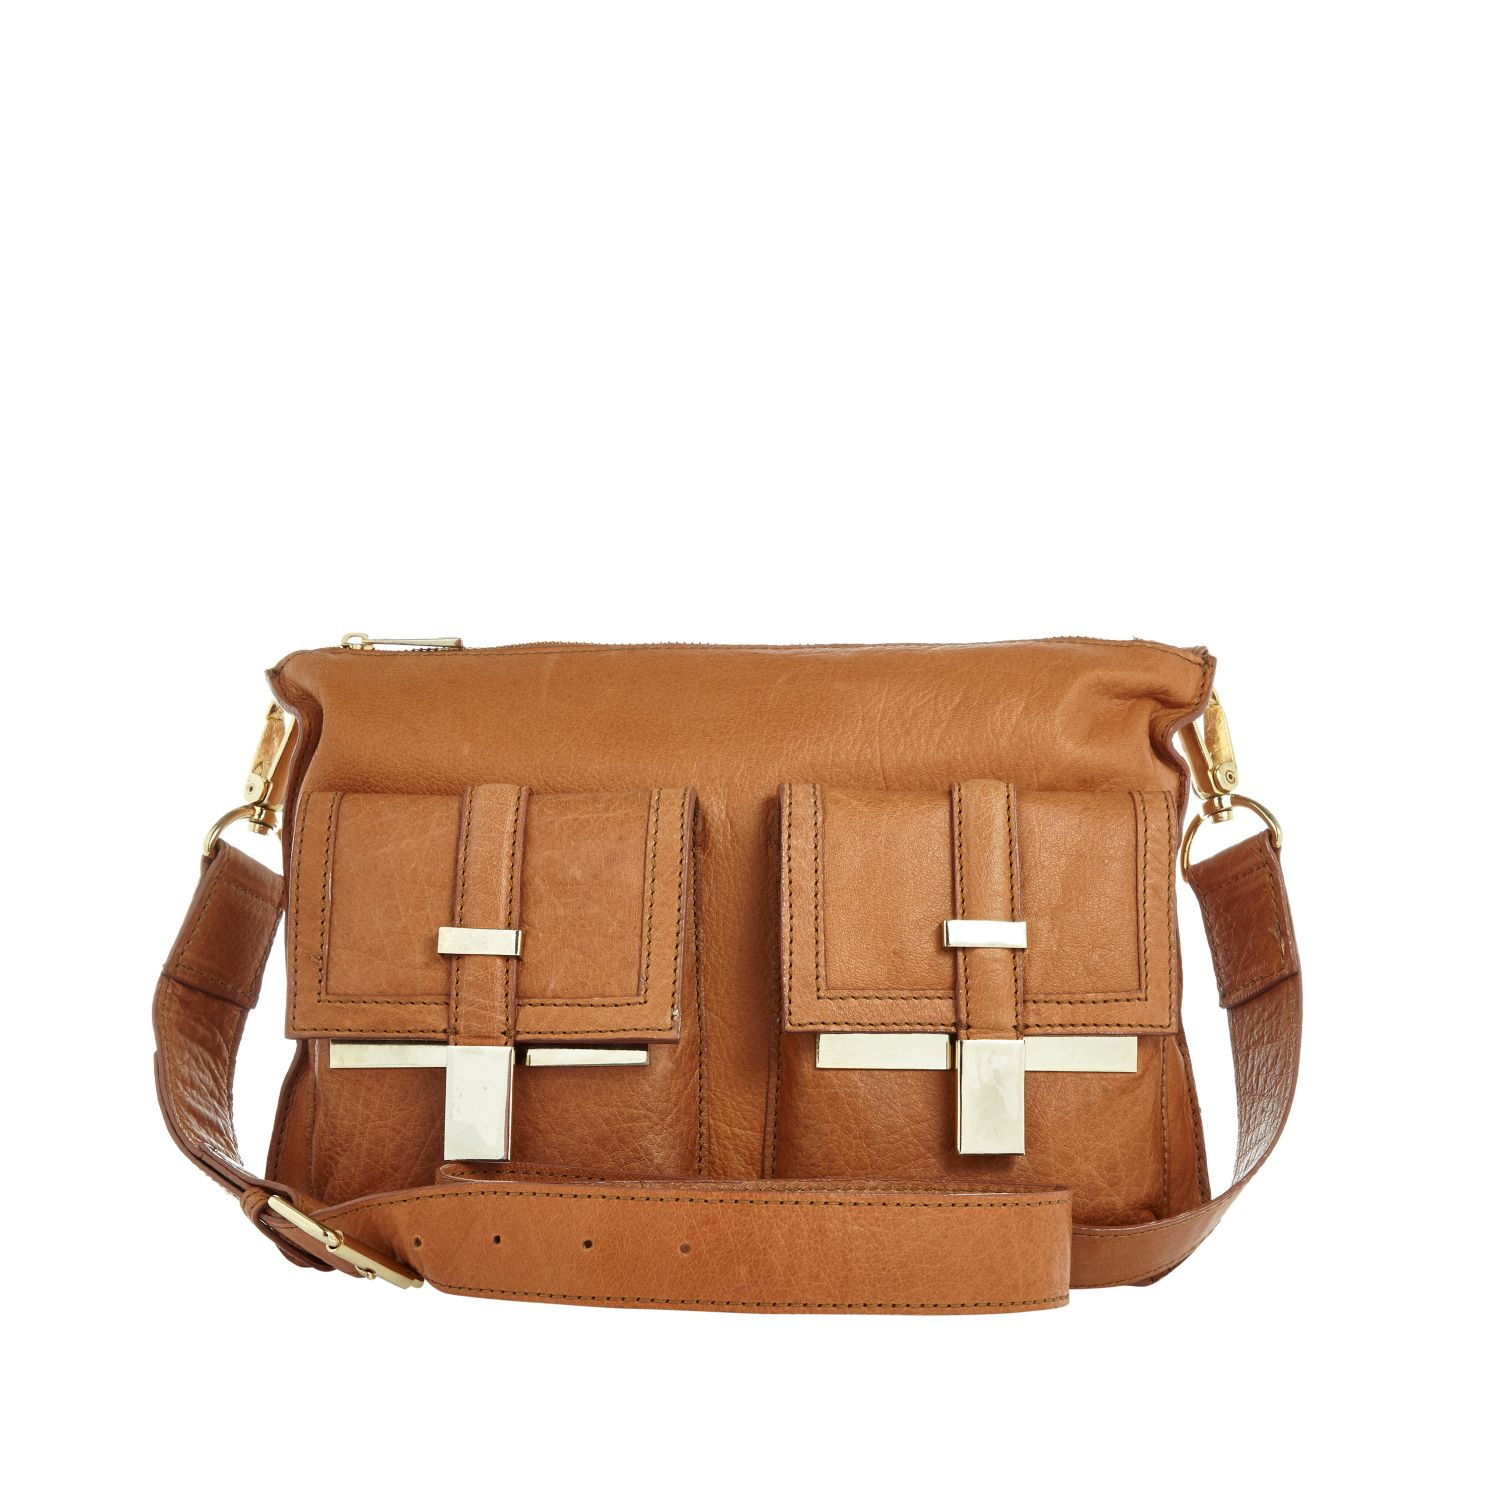 River Island Tan Leather Double Pocket Cross Body Bag in Brown (tan)